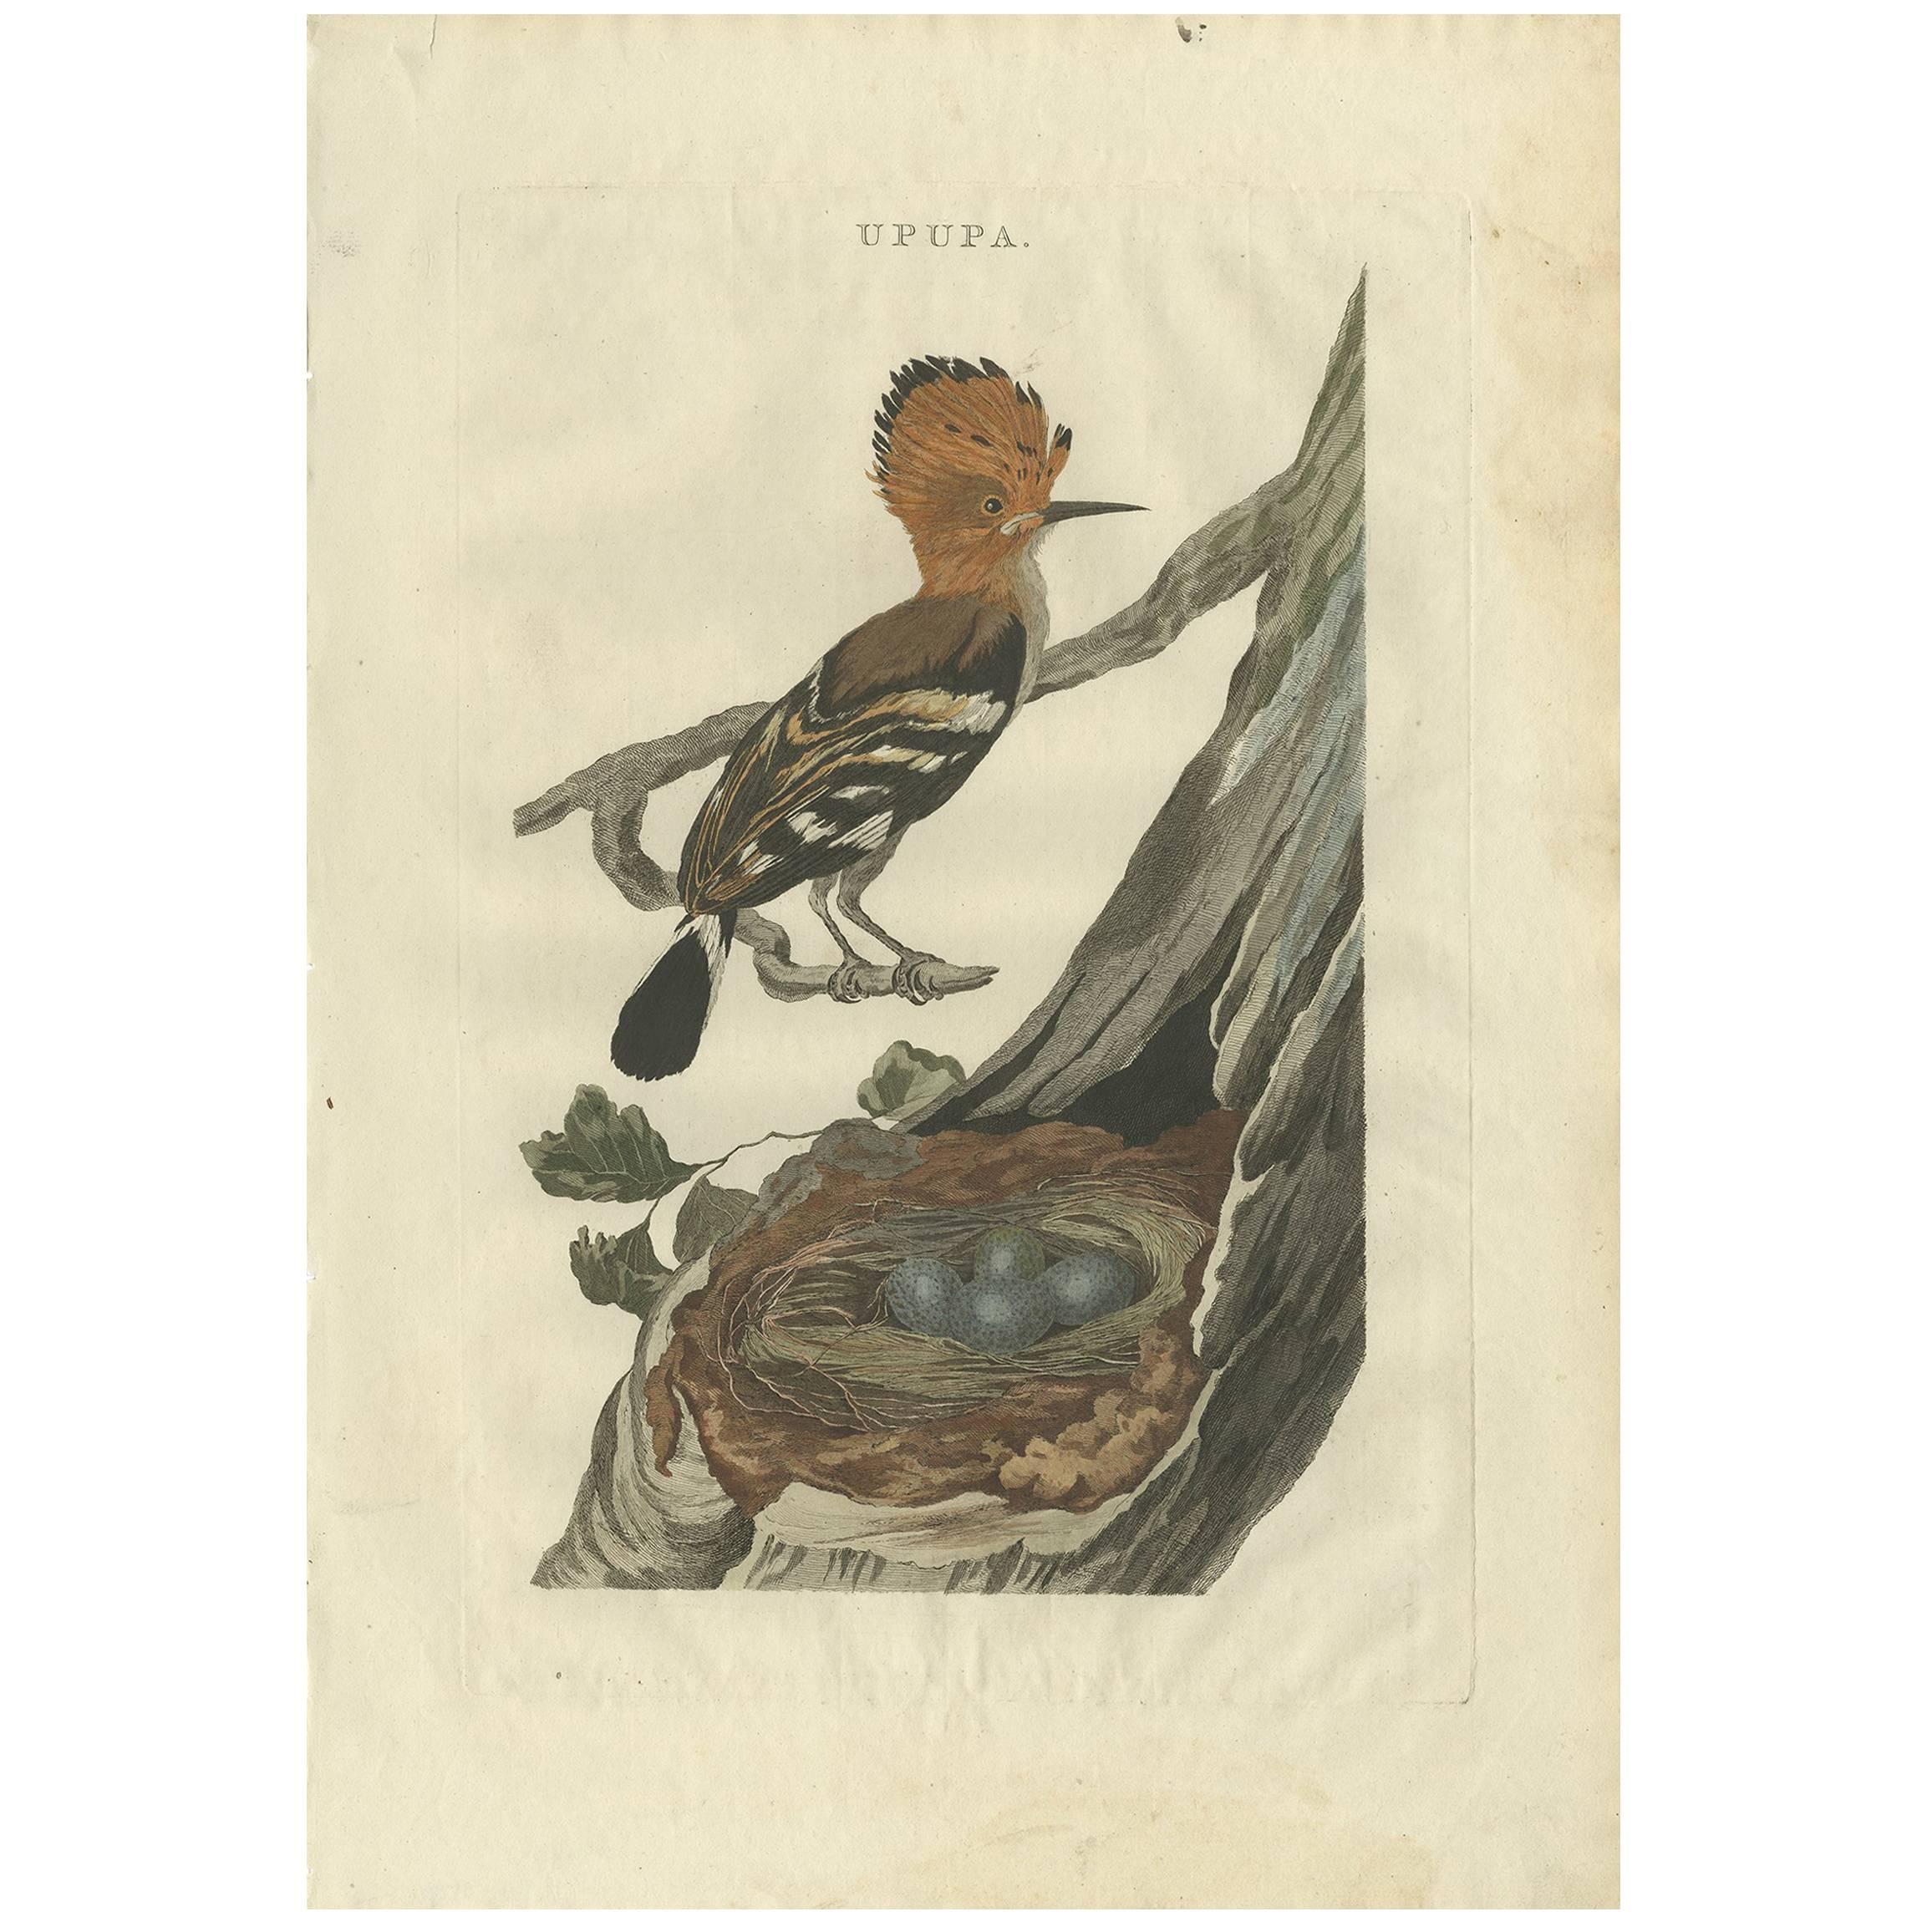 Antique Bird Print of the Hoopoe by Sepp & Nozeman, 1789